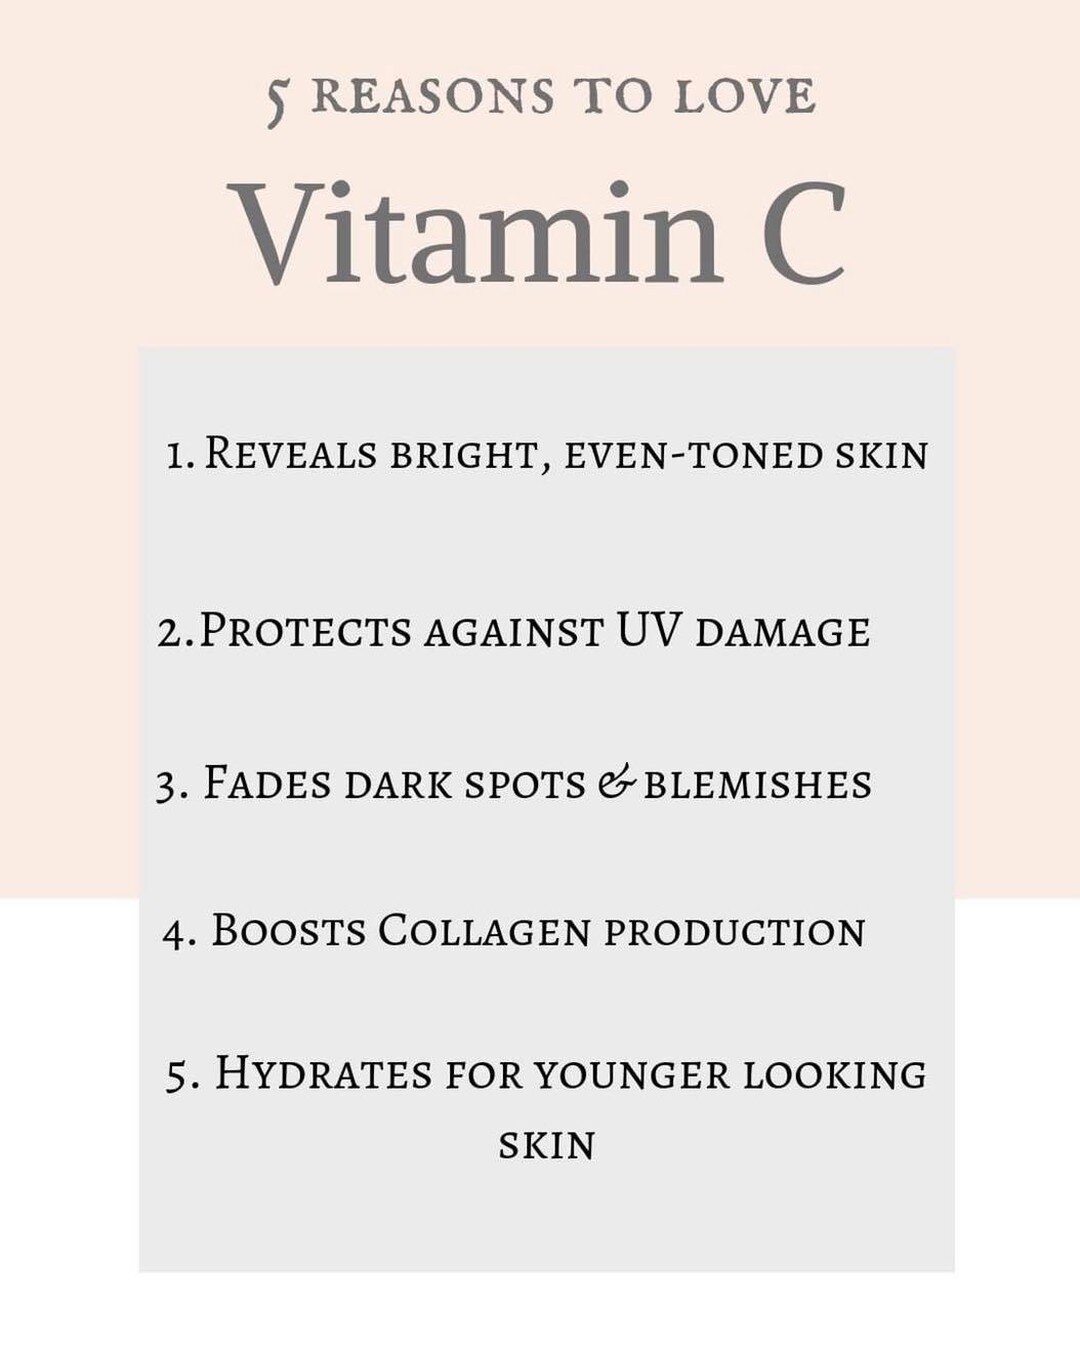 Benefits of vitamin C:🍊